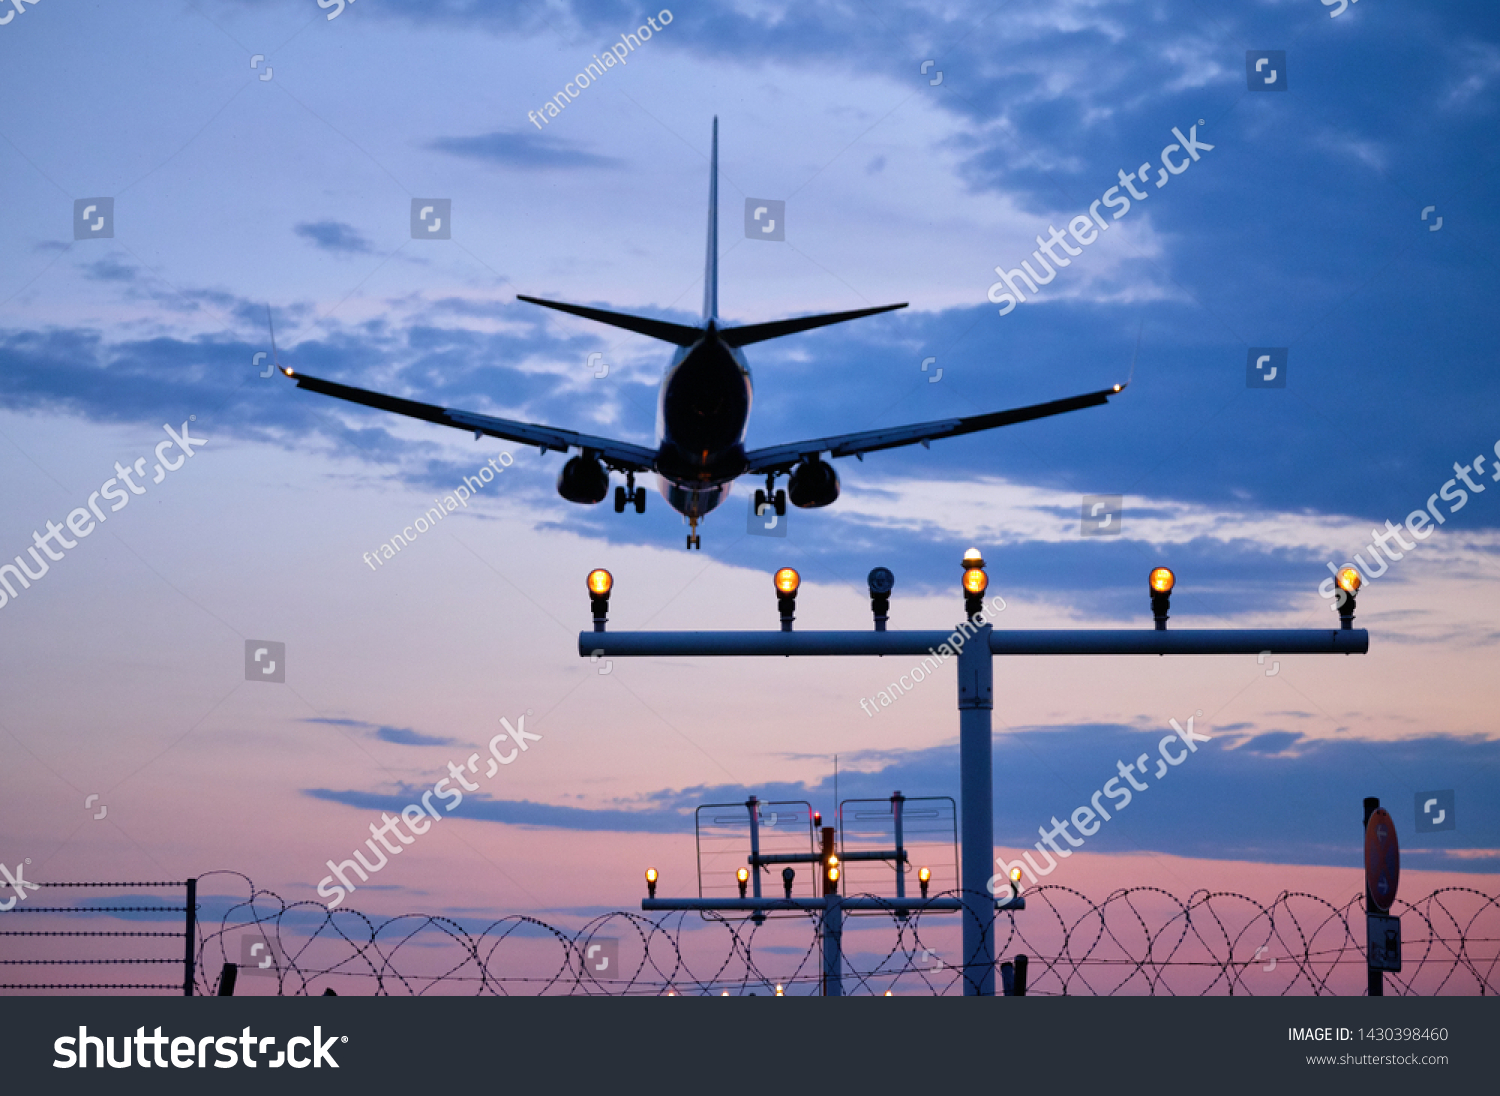 Albrecht dürer airport Images, Stock Photos & Vectors   Shutterstock